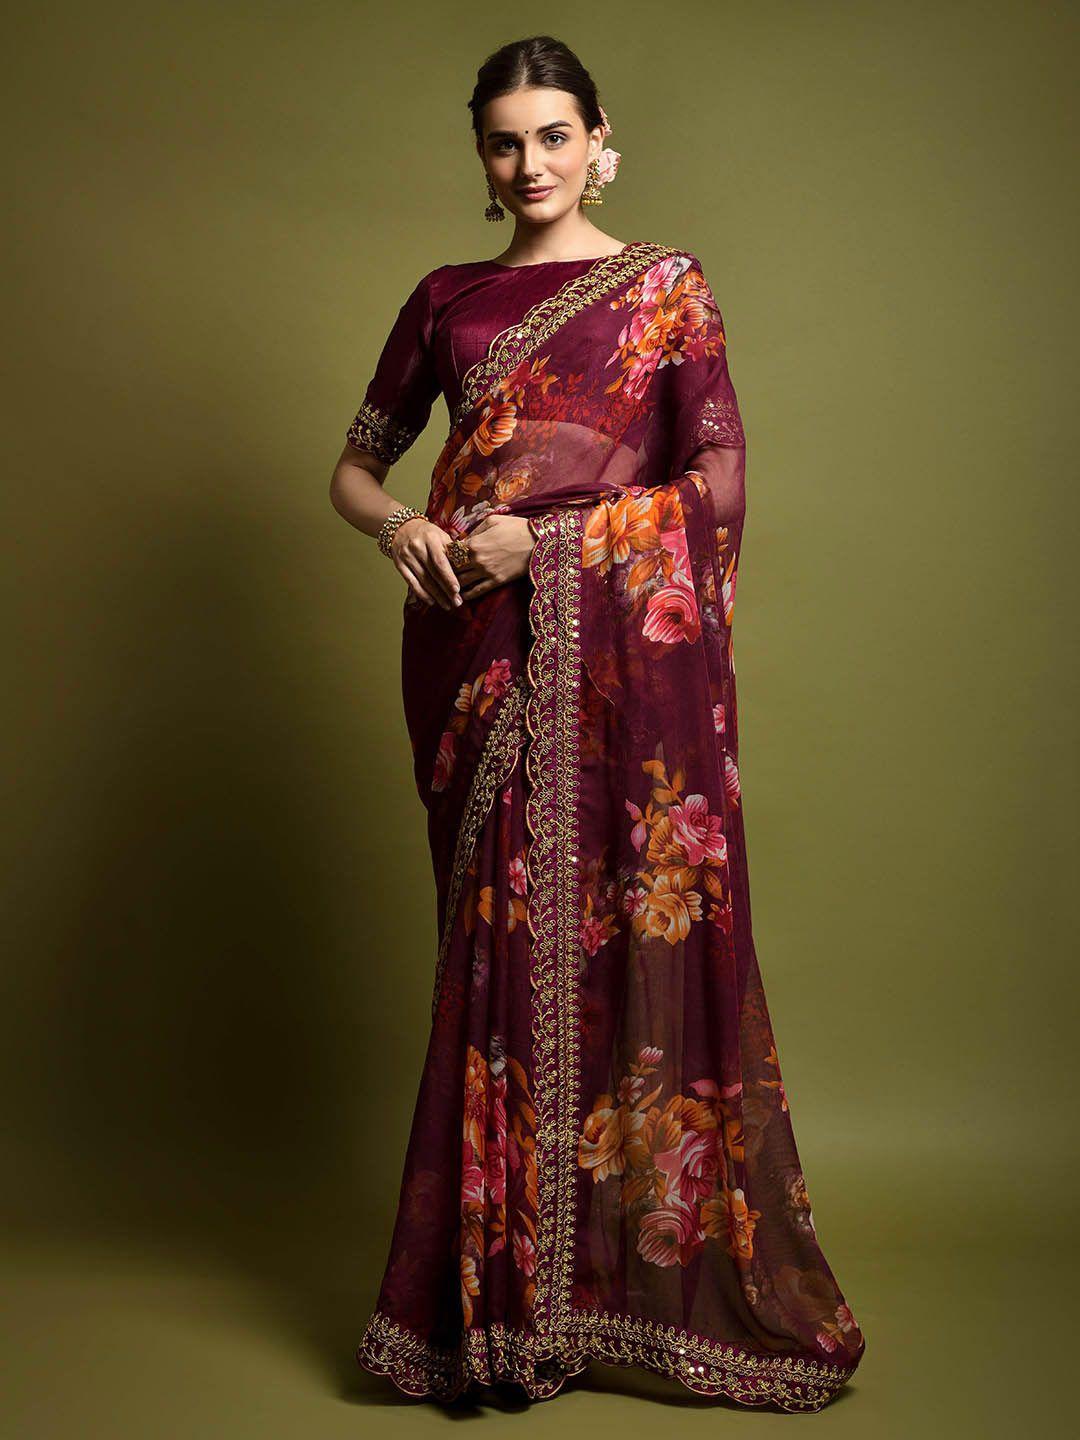 munir floral printed sequinned saree